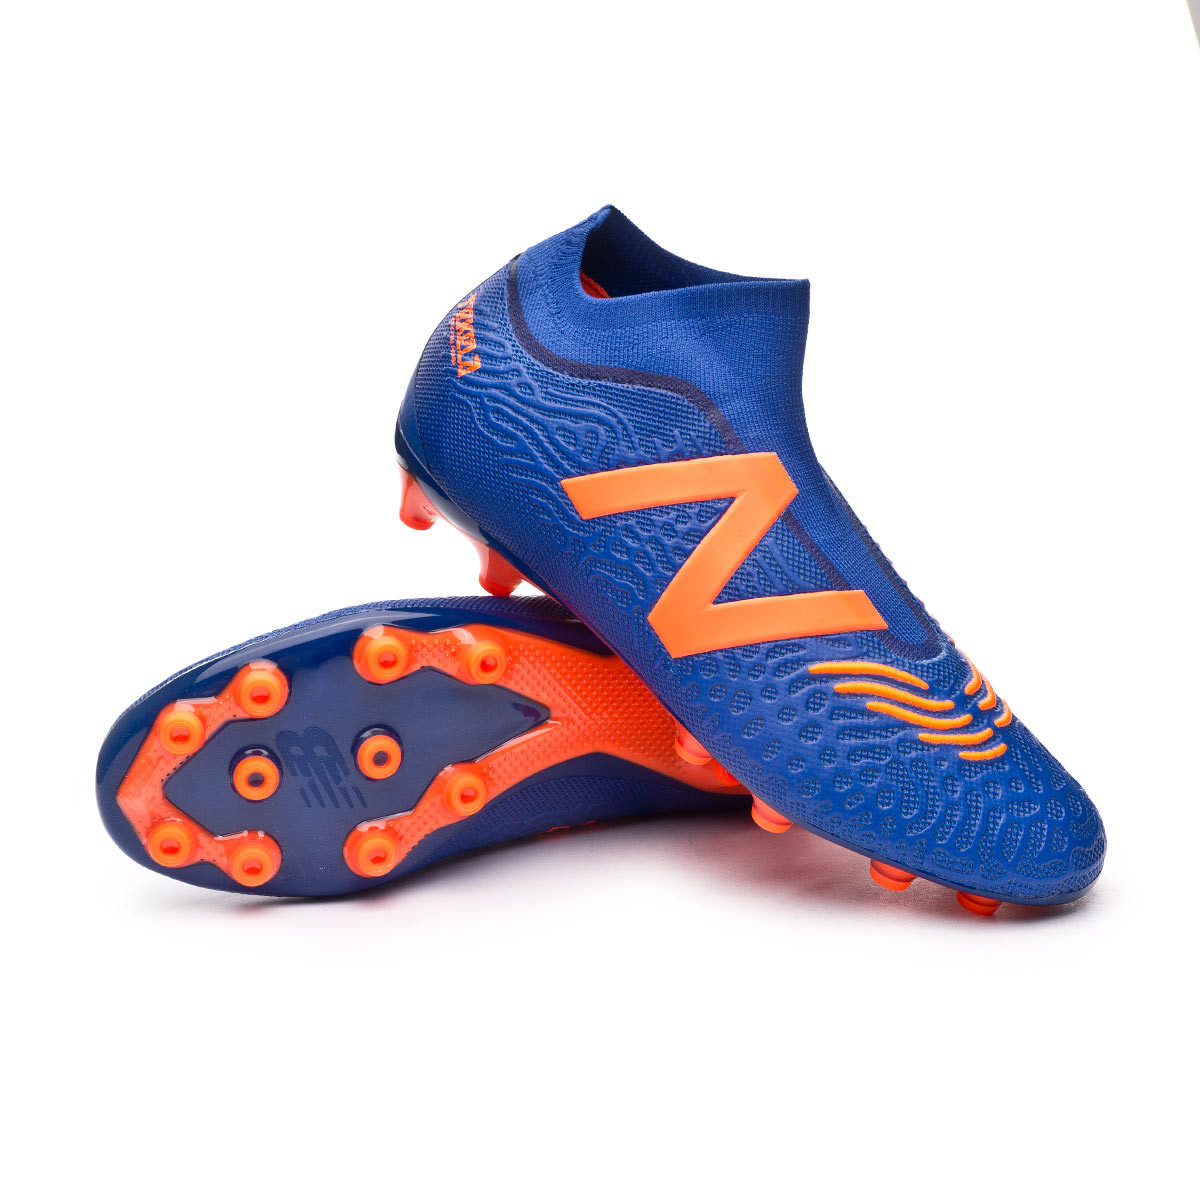 New Balance Tekela v3 Magia AG Football Boots